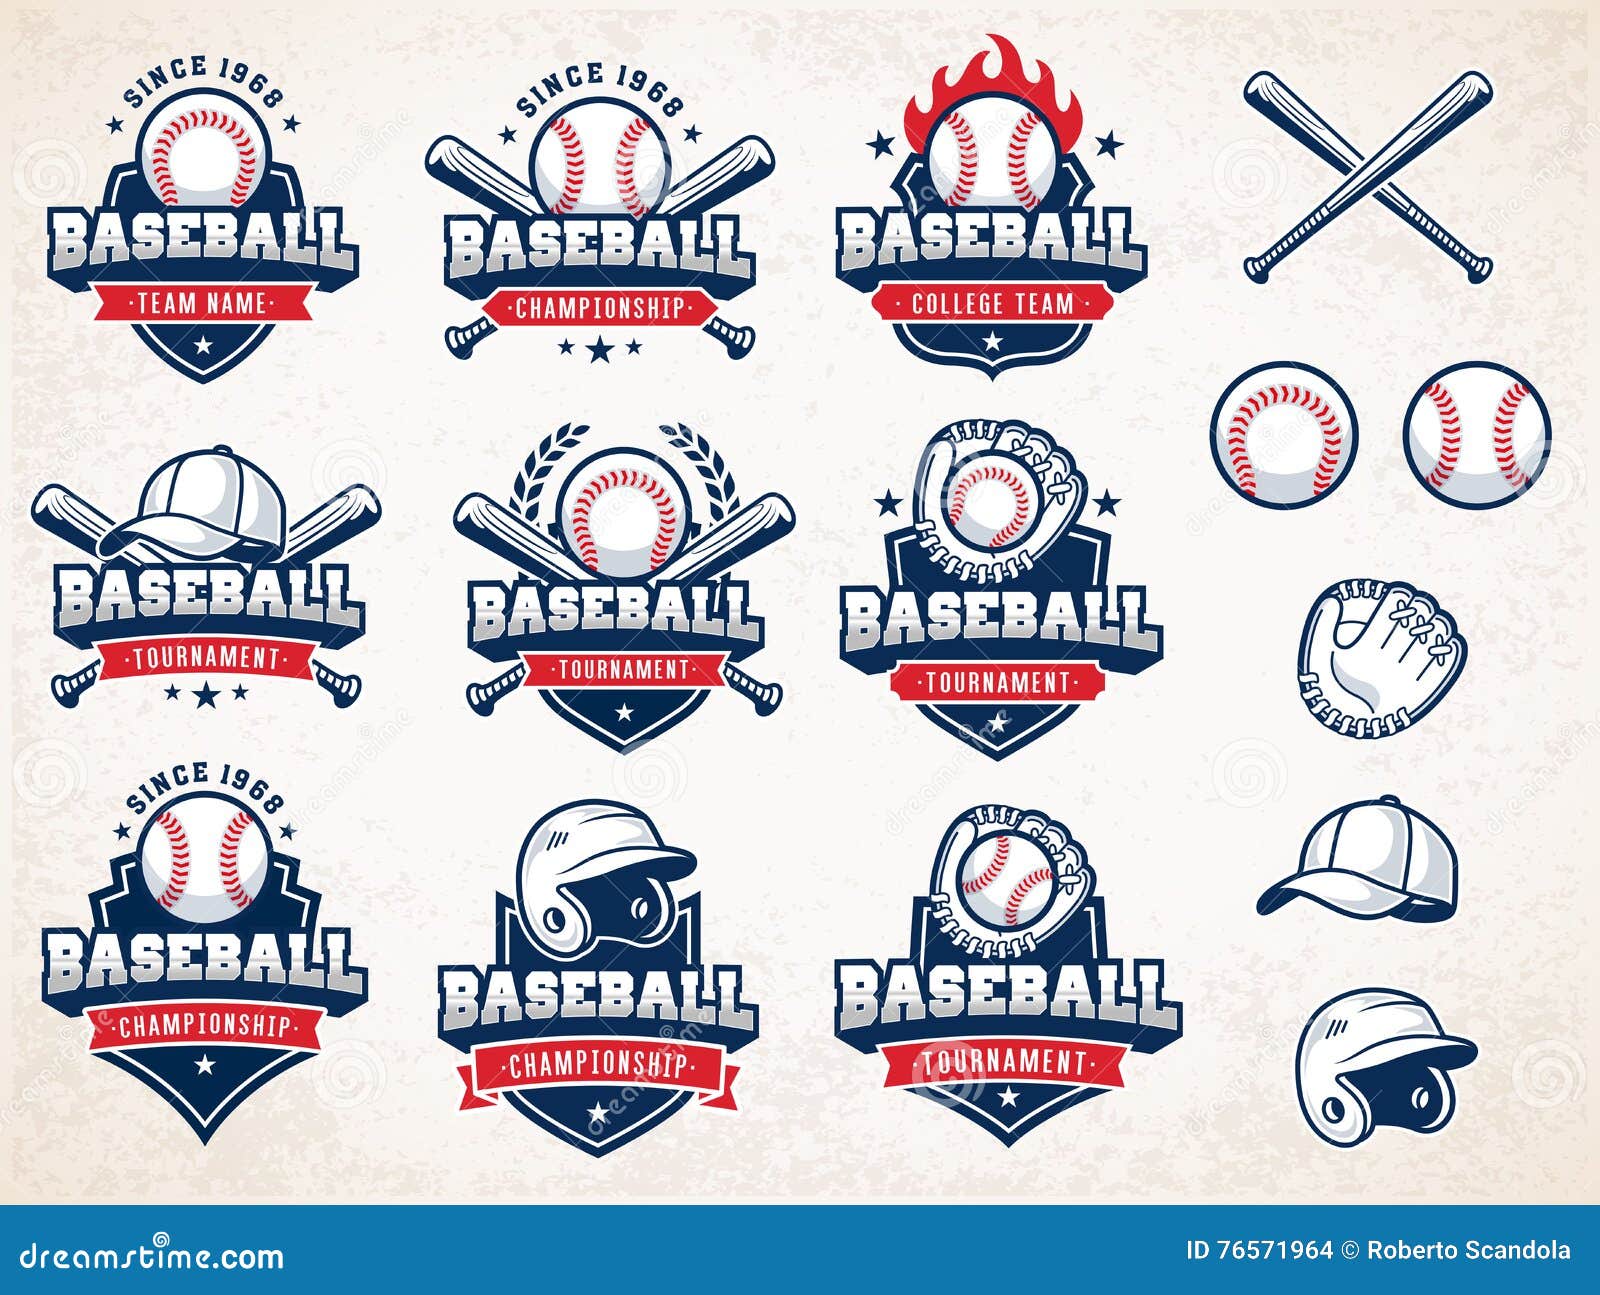 white, red and blue  baseball logos